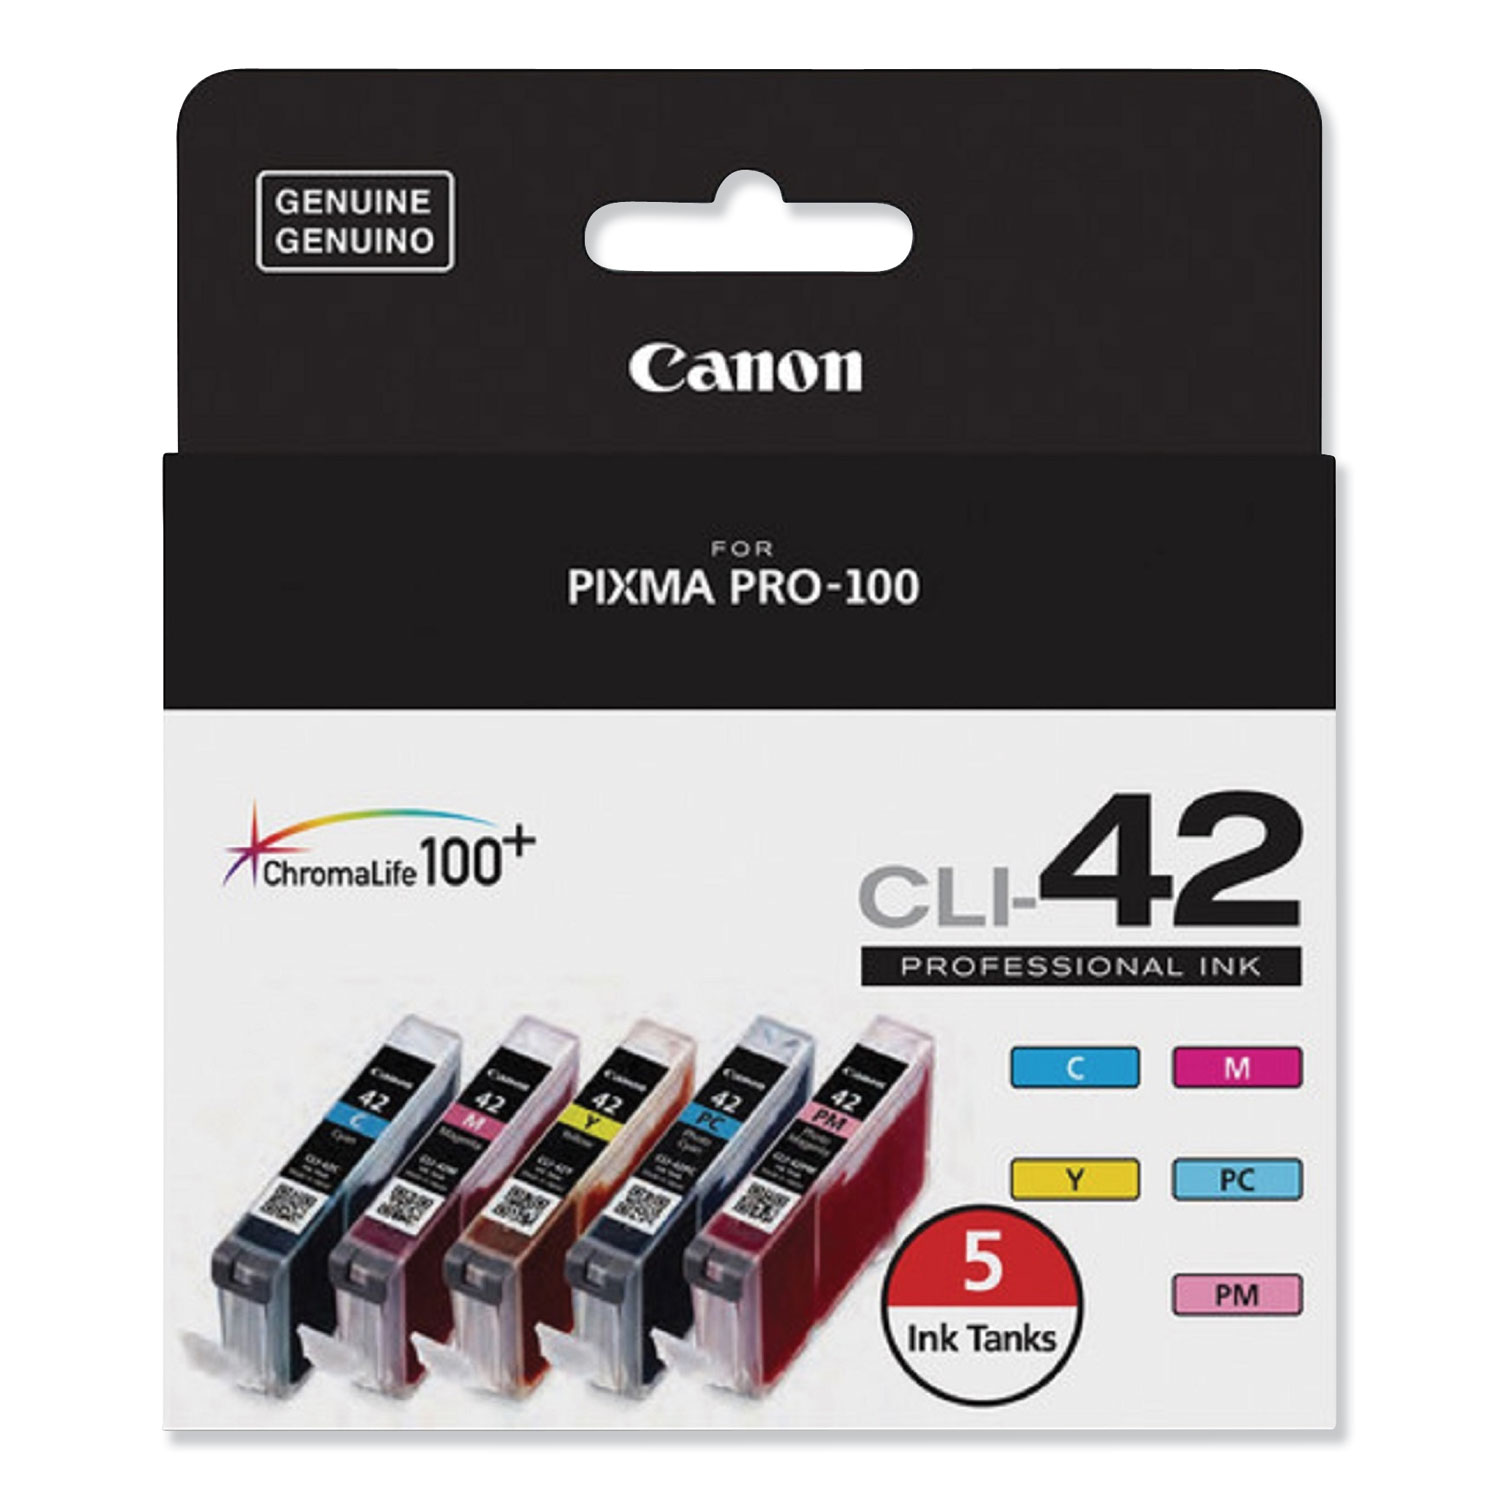  Canon 6385B010 6385B010 (CLI-42) ChromaLife100+ Ink, Cyan; Magenta; Yellow; Photo Cyan; Photo Magenta (CNM6385B010) 